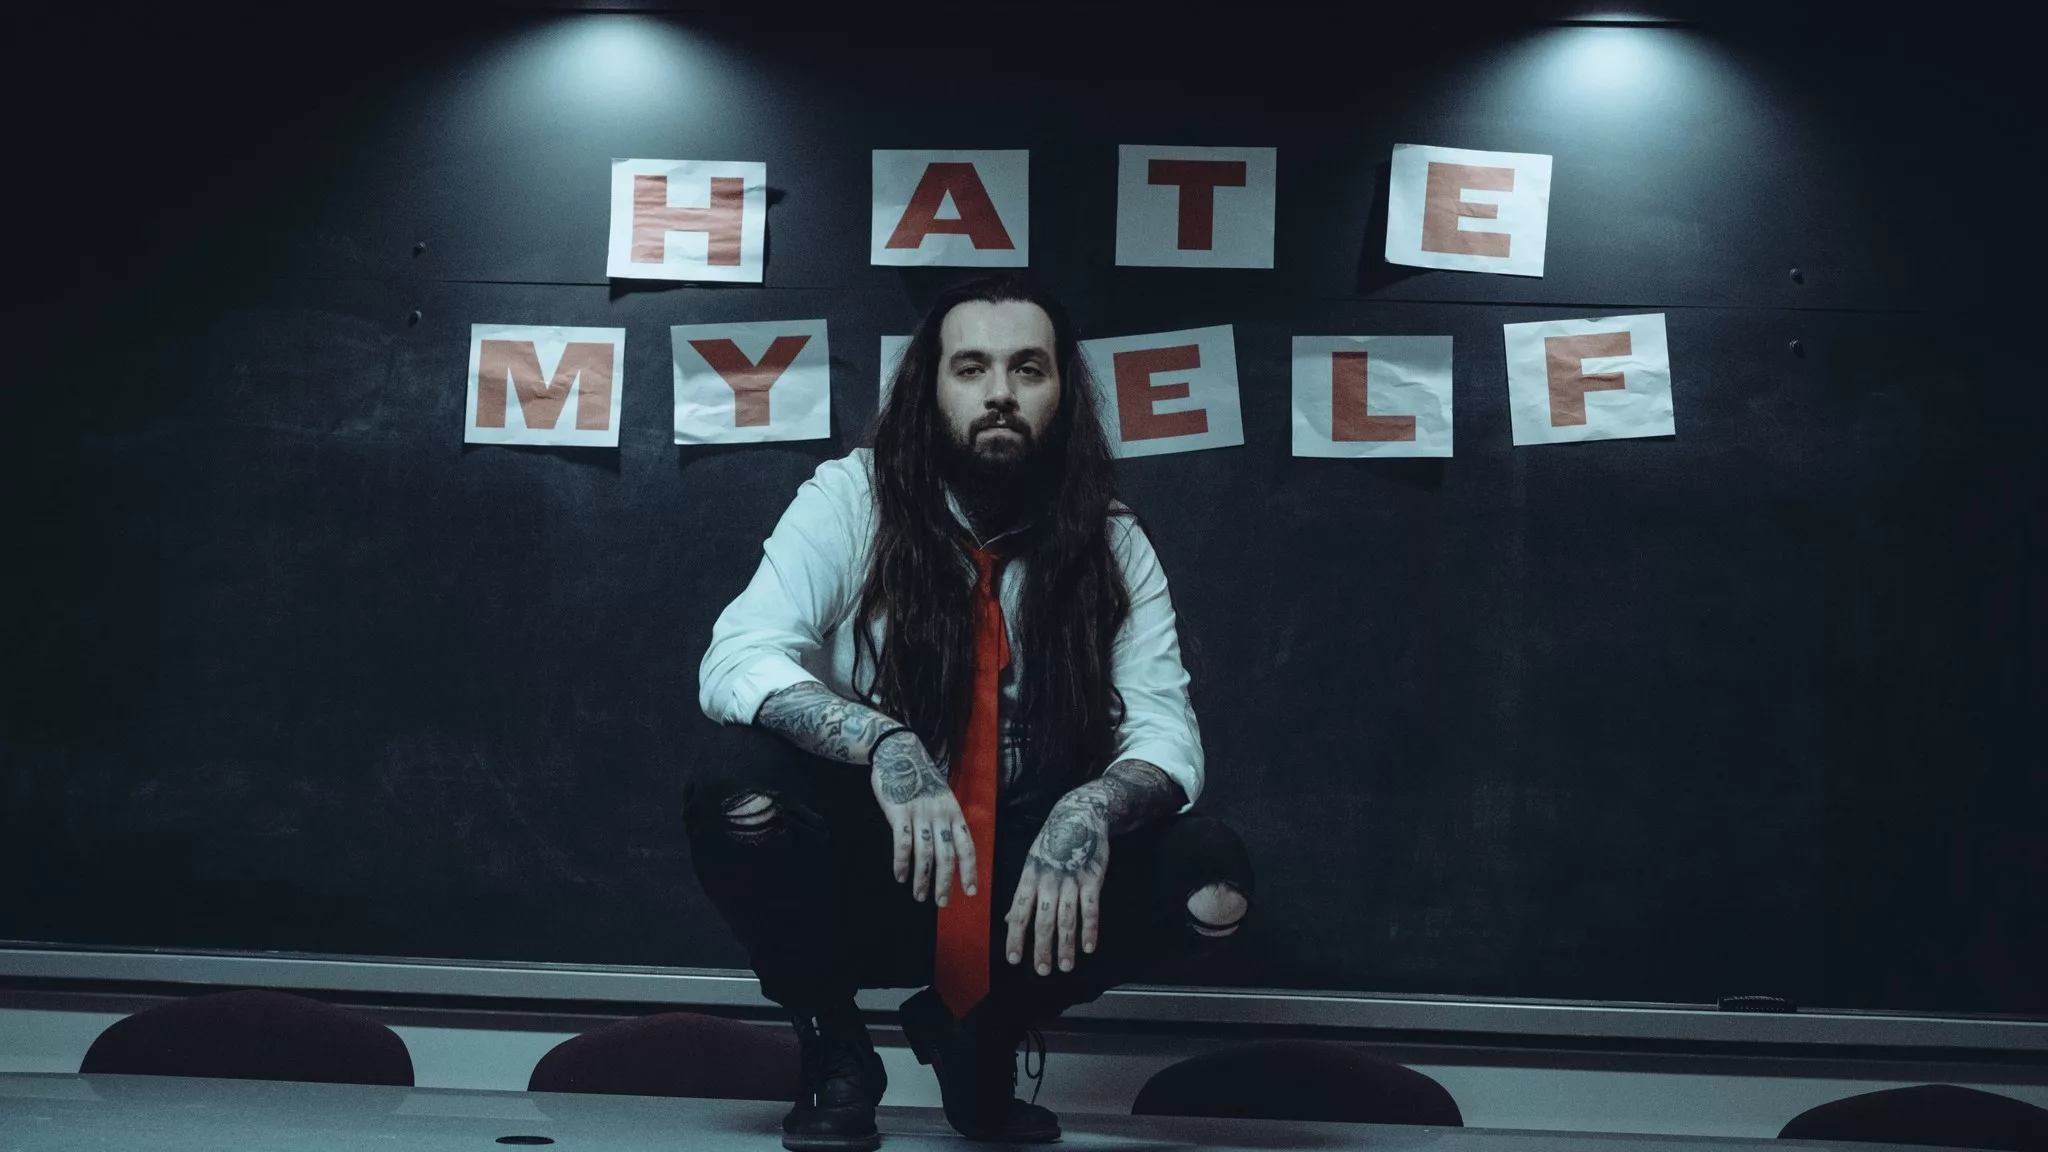 Letdown. lança novo single e clipe. Confira “Hate Myself”